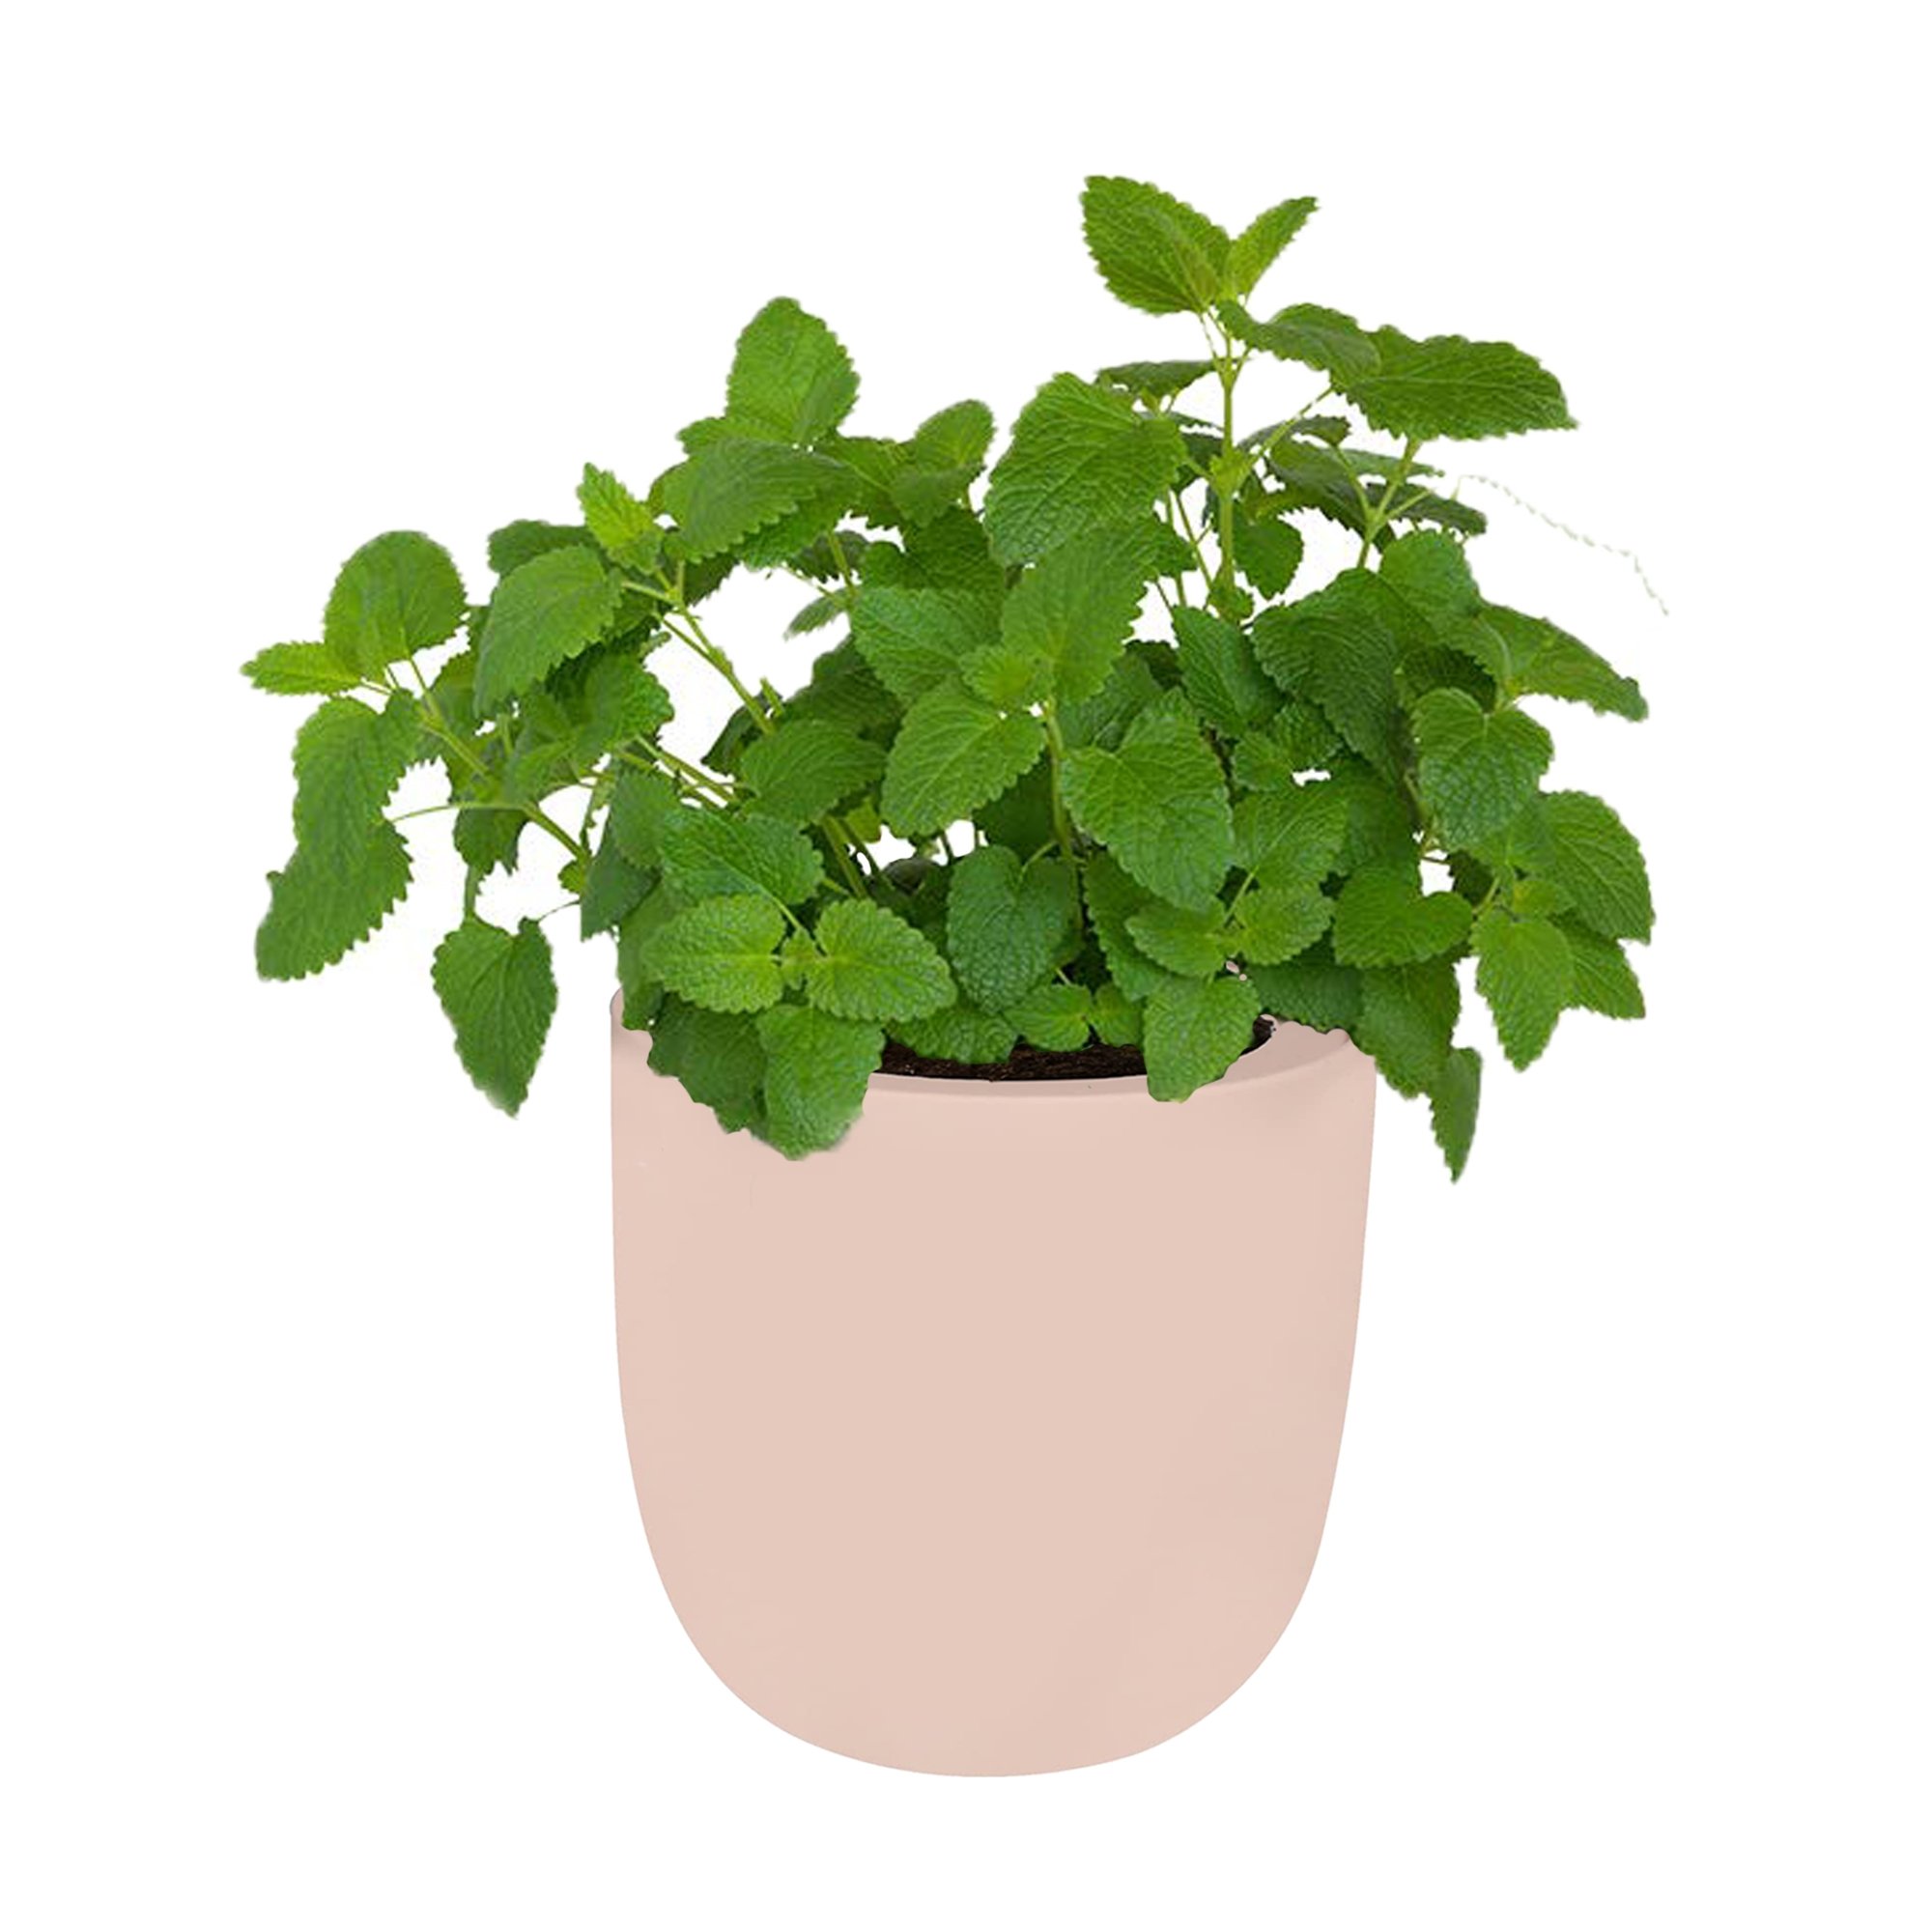 Lemon Balm Pink Ceramic Pot Hydroponic Growing Kit with Seeds